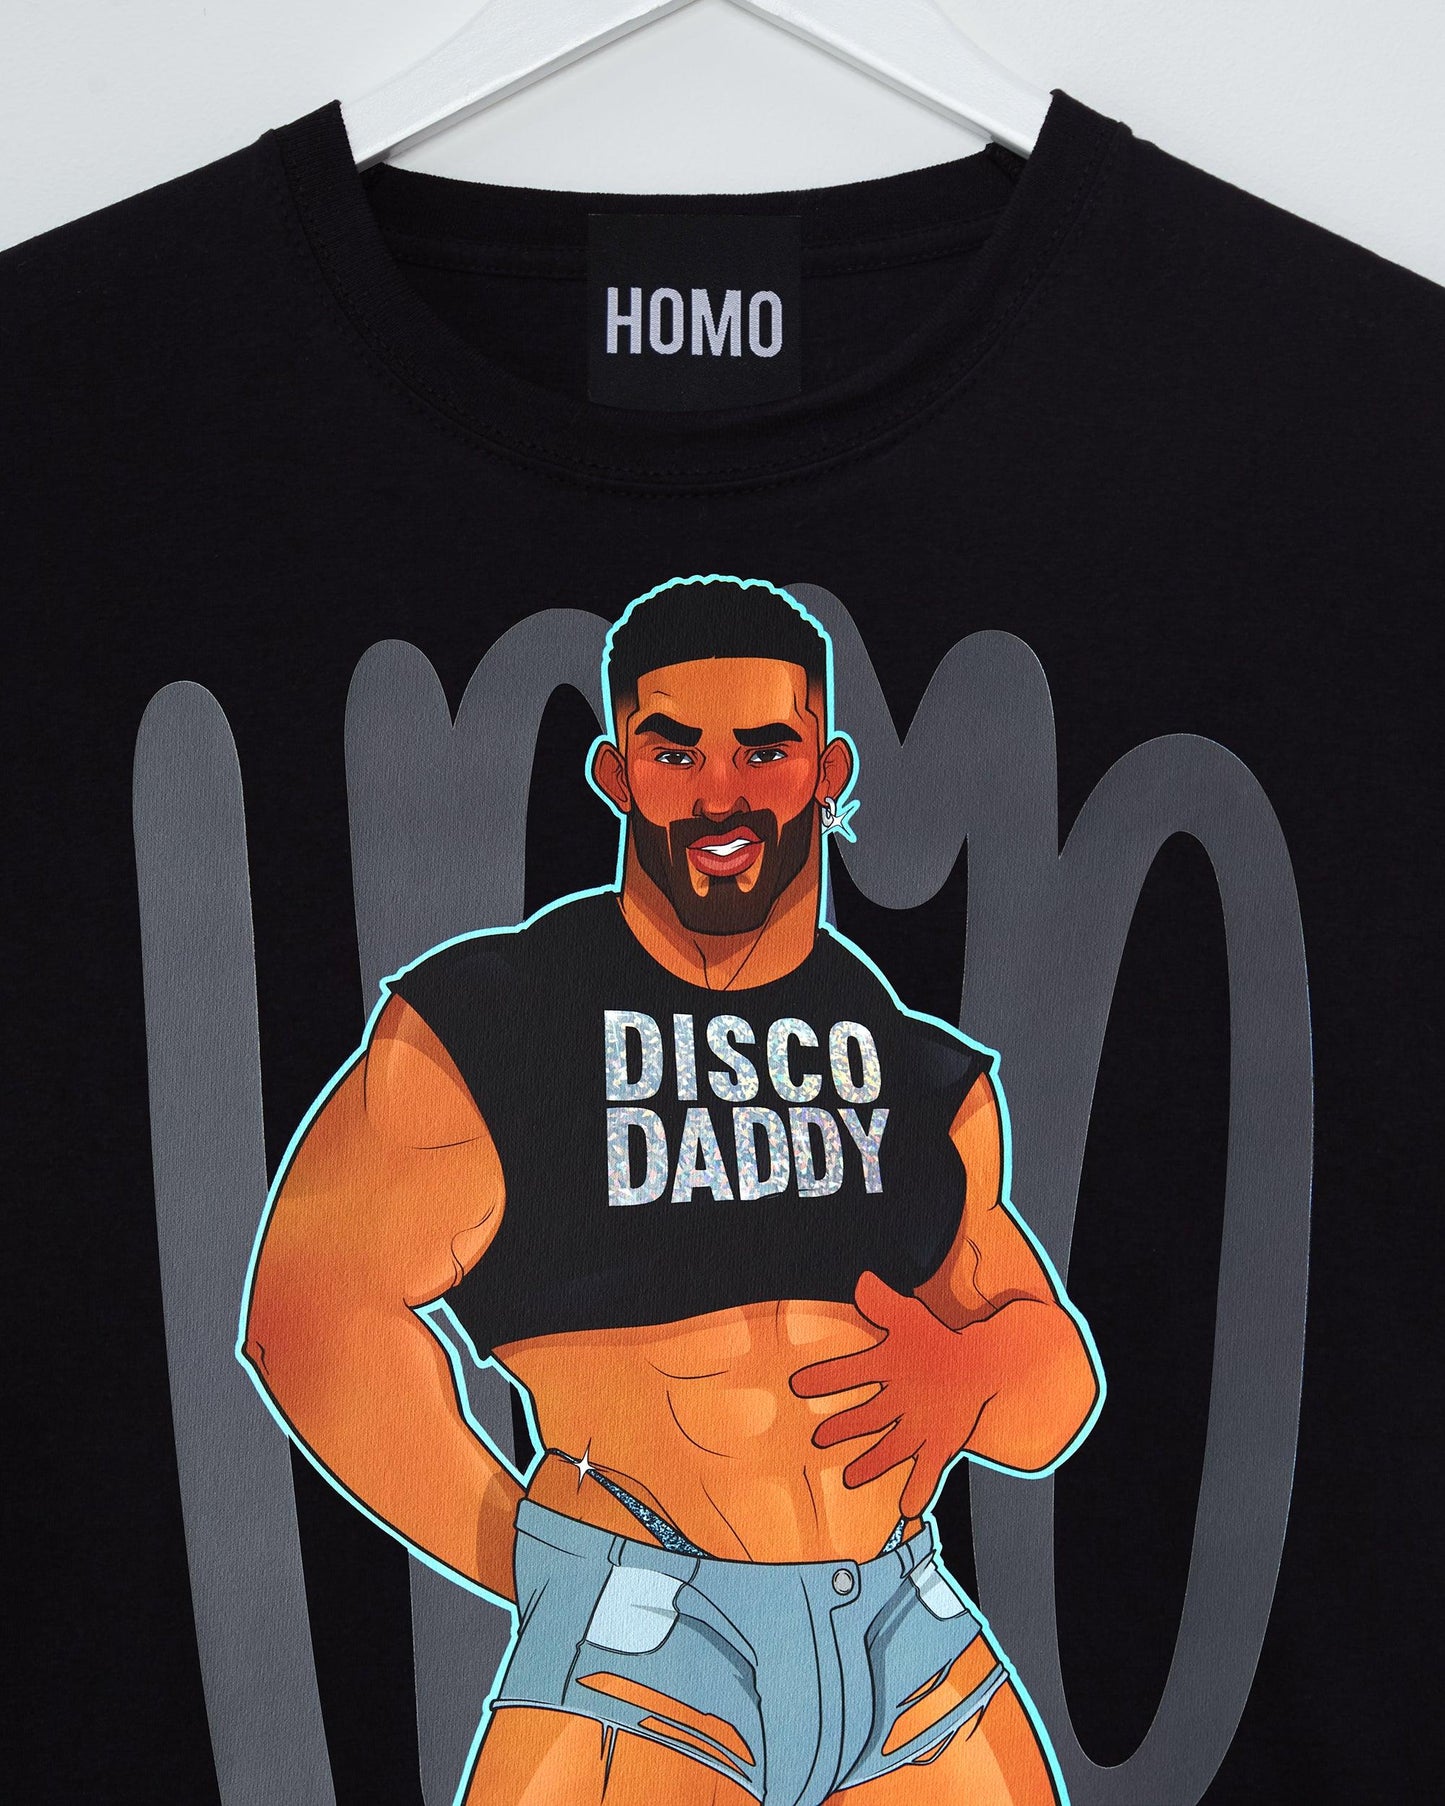 Trent the disco daddy - black tshirt - HOMOLONDON